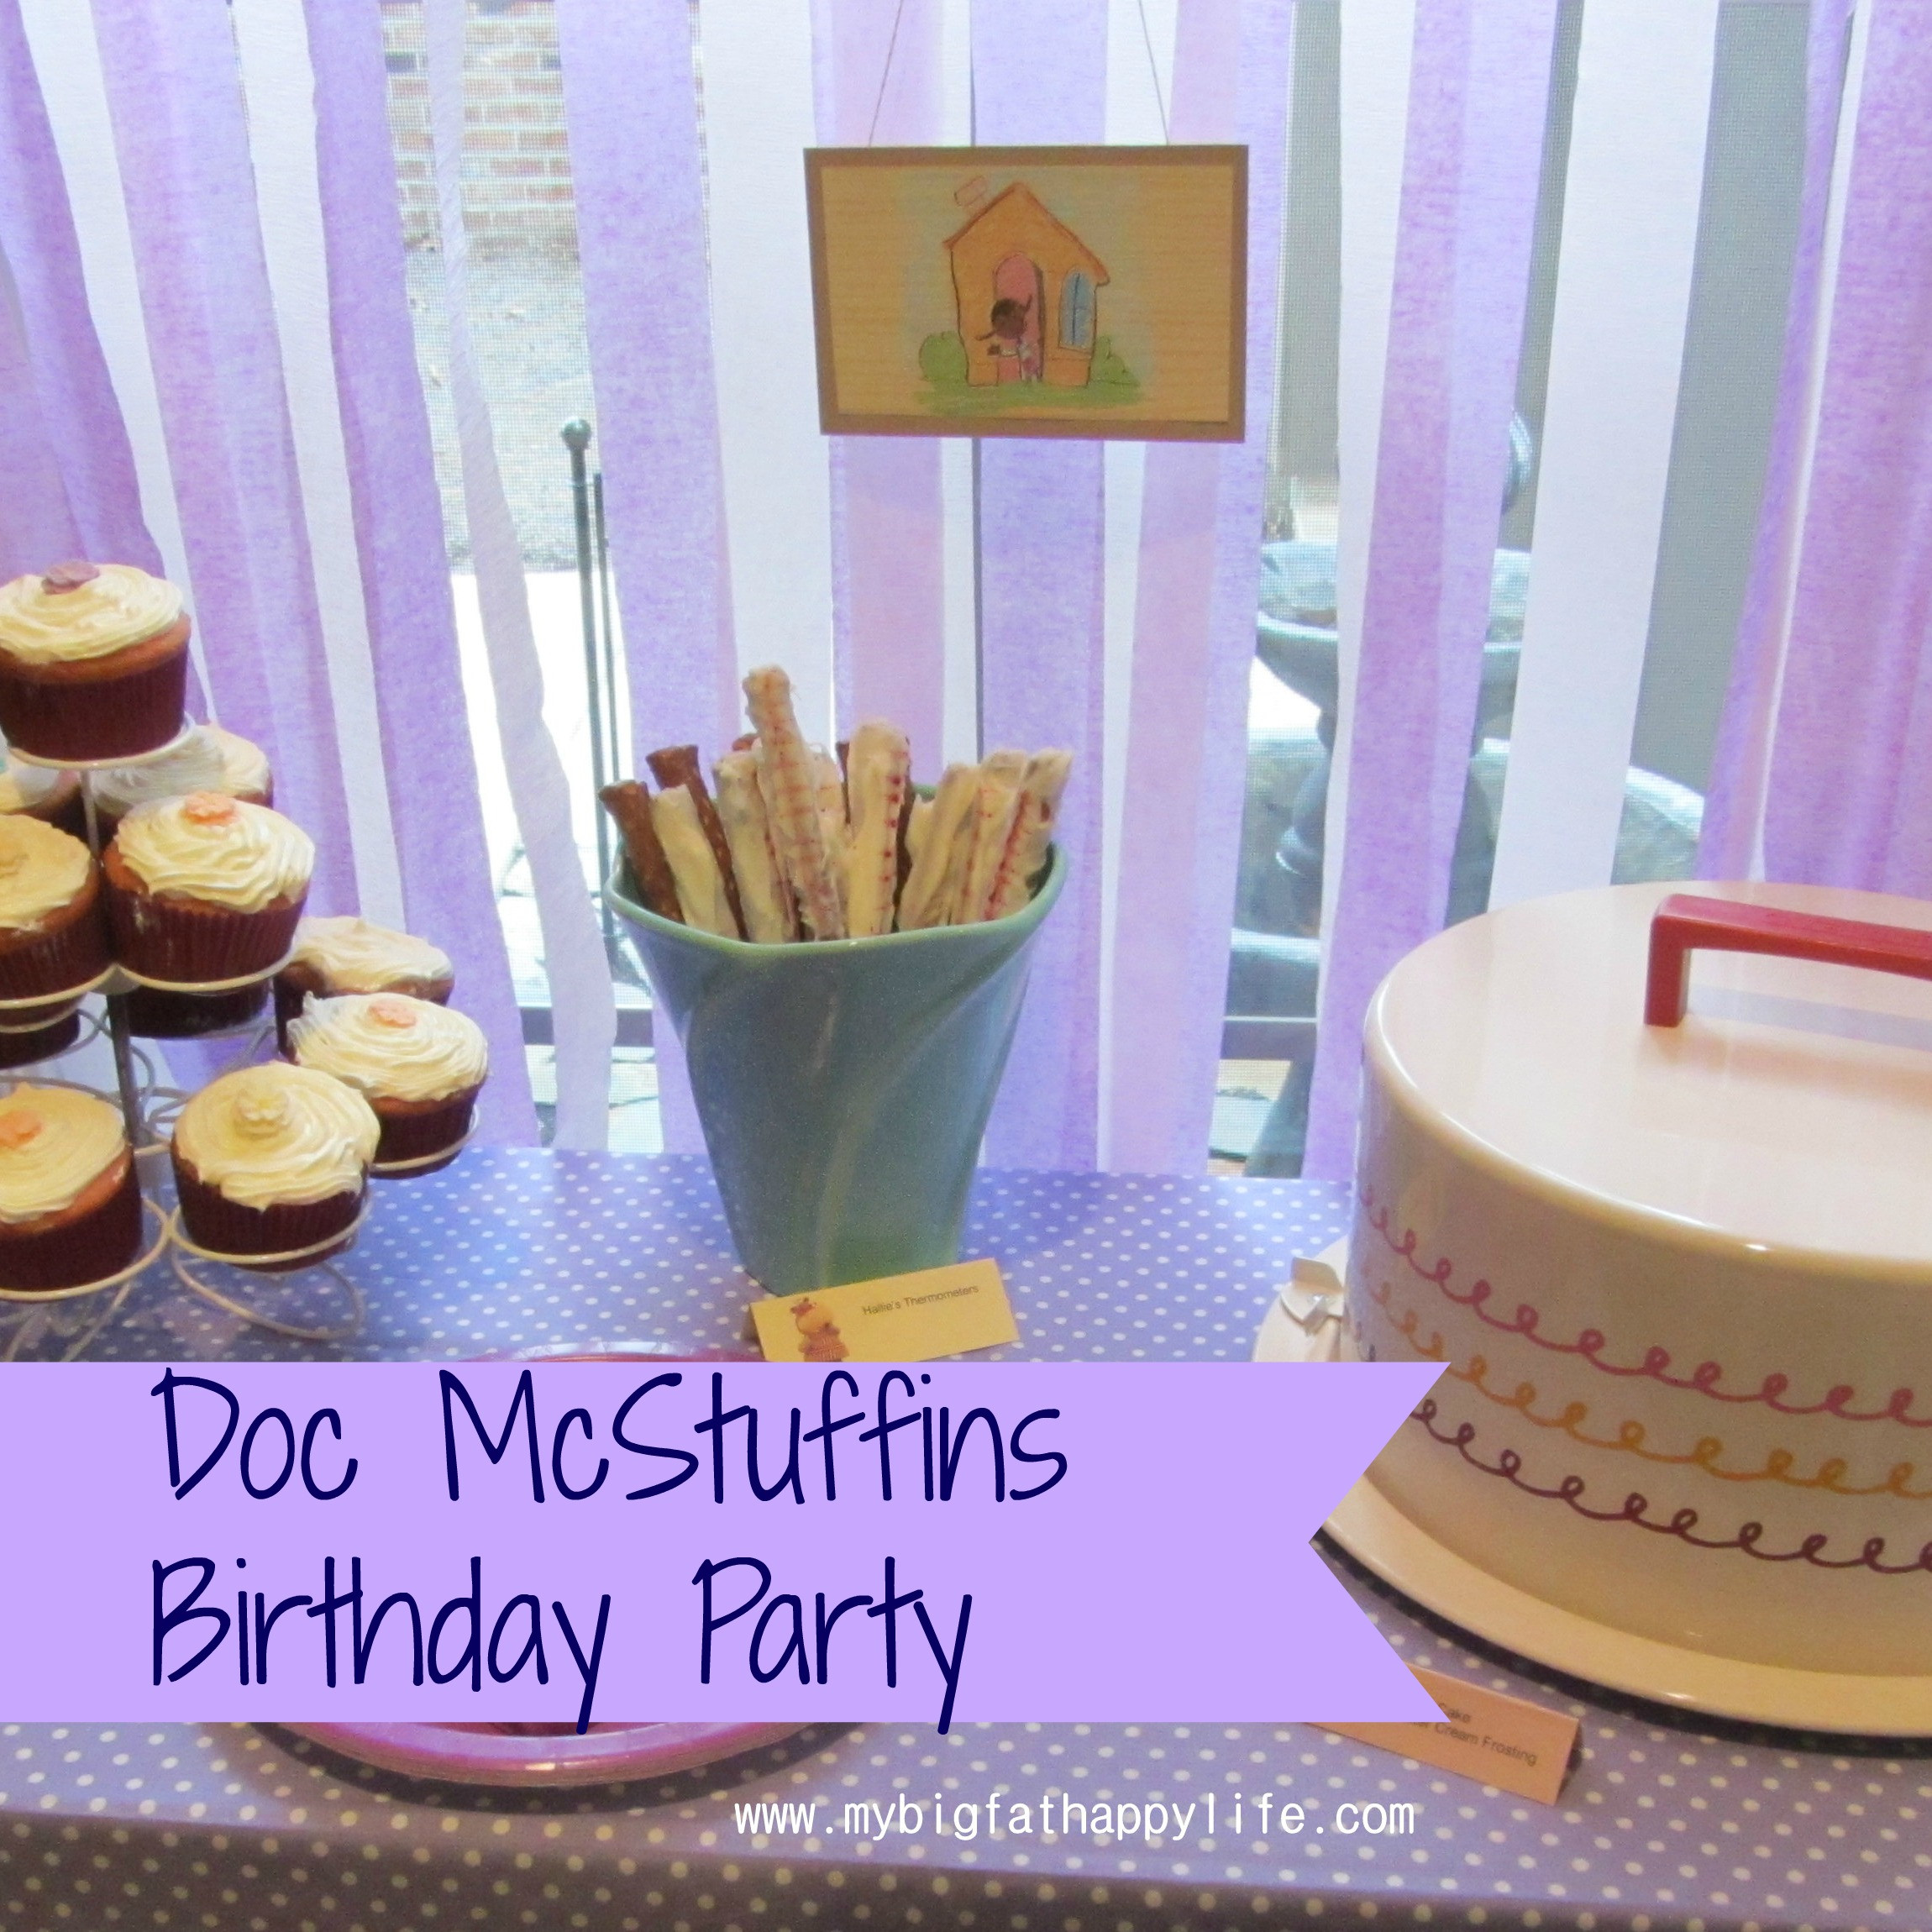 Doc Mcstuffin Birthday Party Ideas
 Birthday Party Doc McStuffins My Big Fat Happy Life